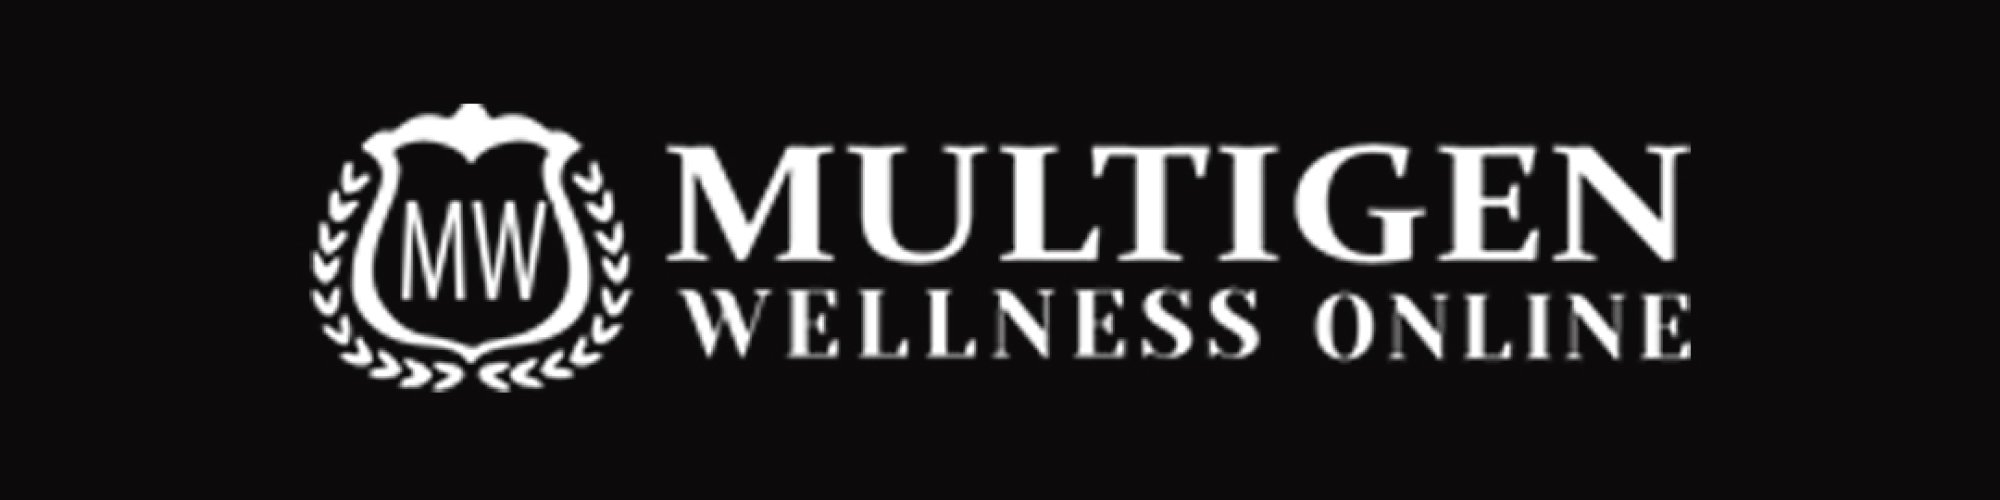 MultiGen Wellness